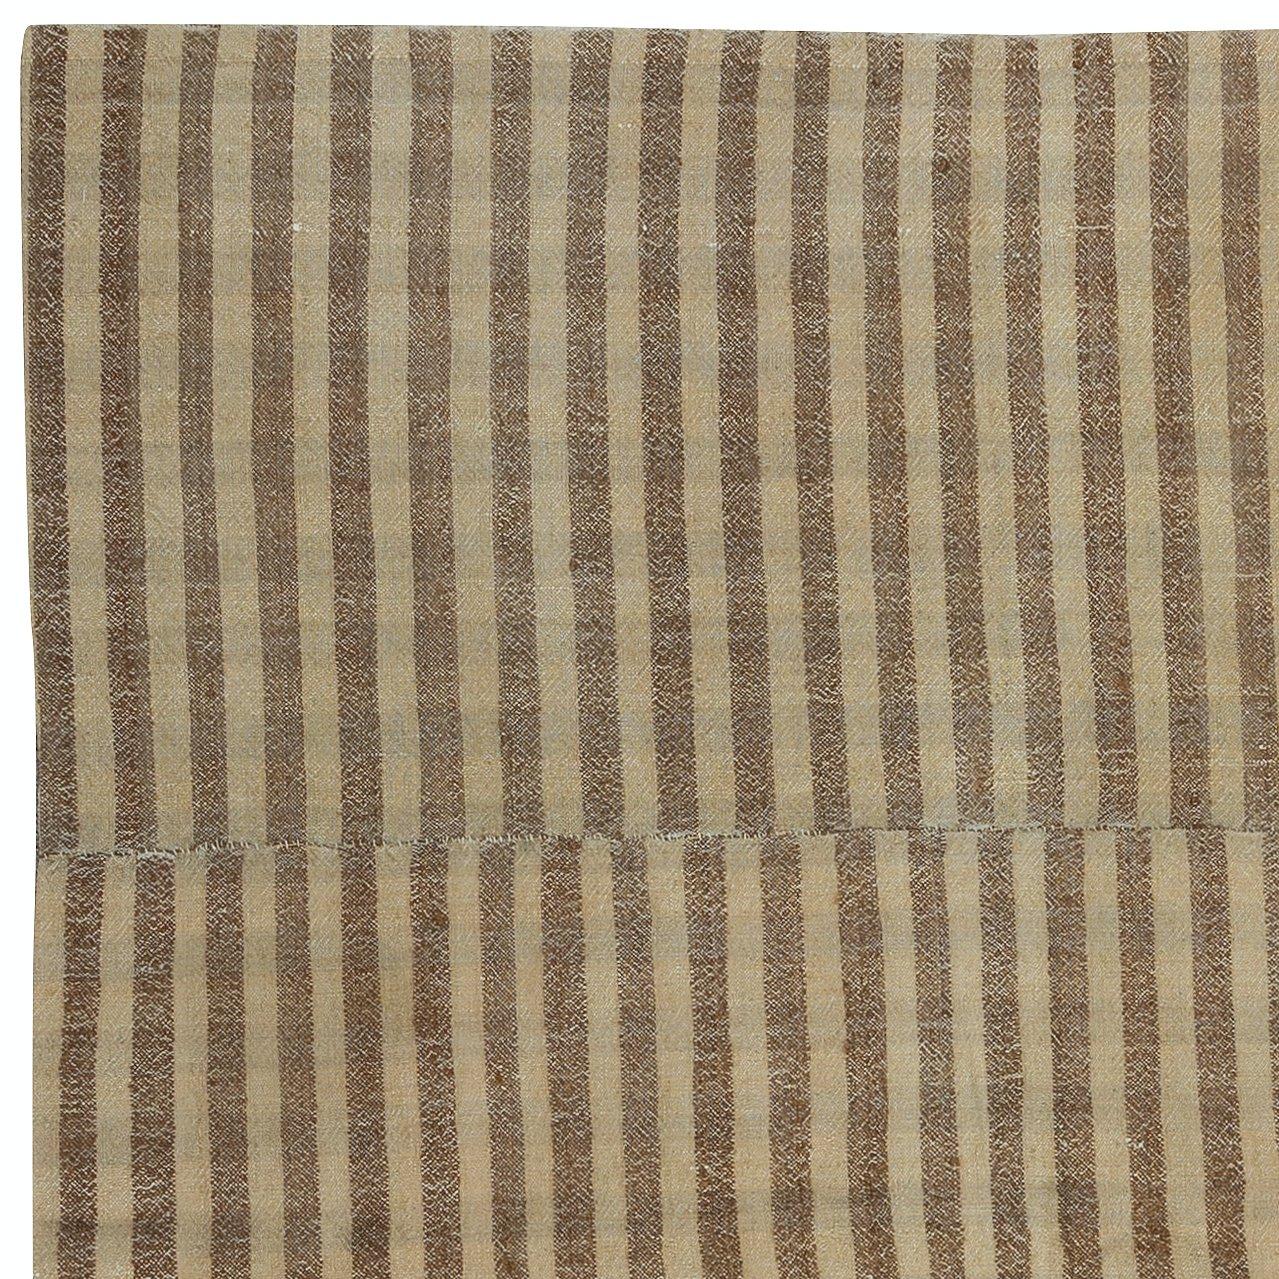 Turkish 4.2x4.6 Ft Flat-Weave Vintage Anatolian Kilim, Hand-Woven Striped Rug, 100% Wool For Sale